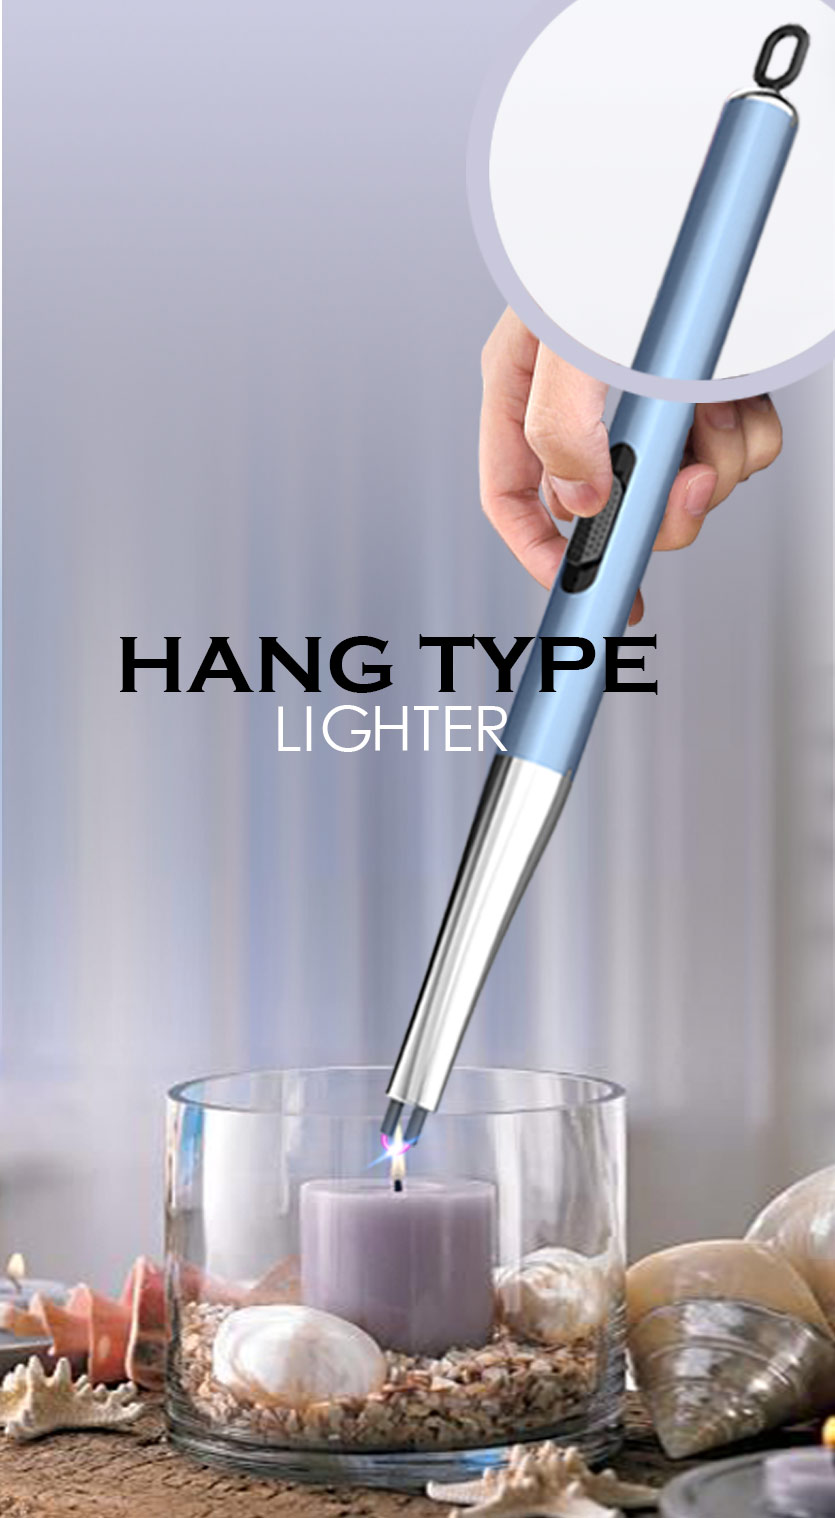 hang type lighter